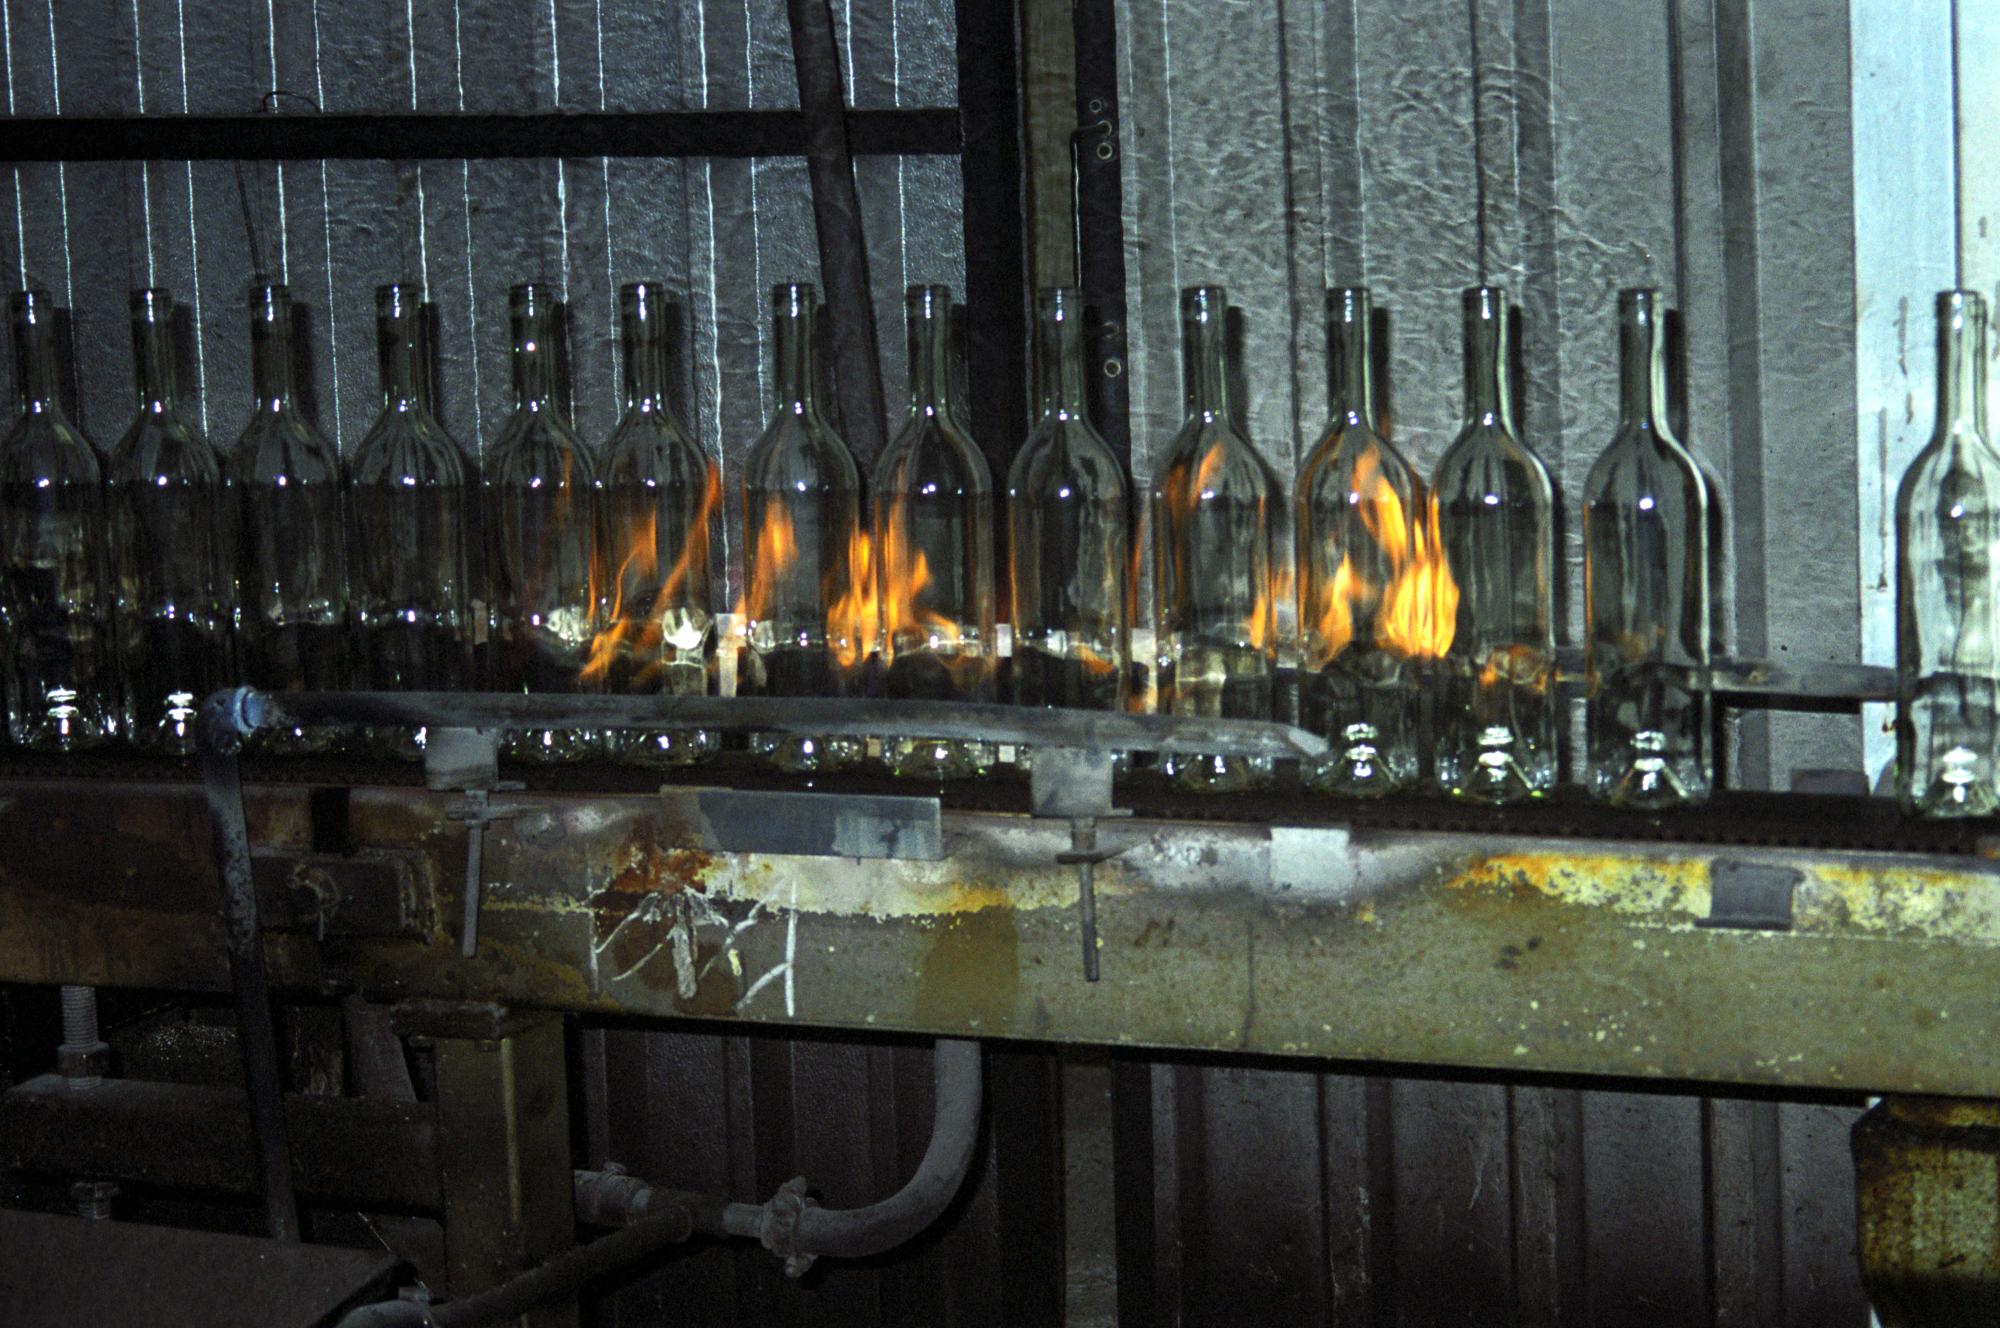 Dresden (2001) - Bottle Manufacturing #2